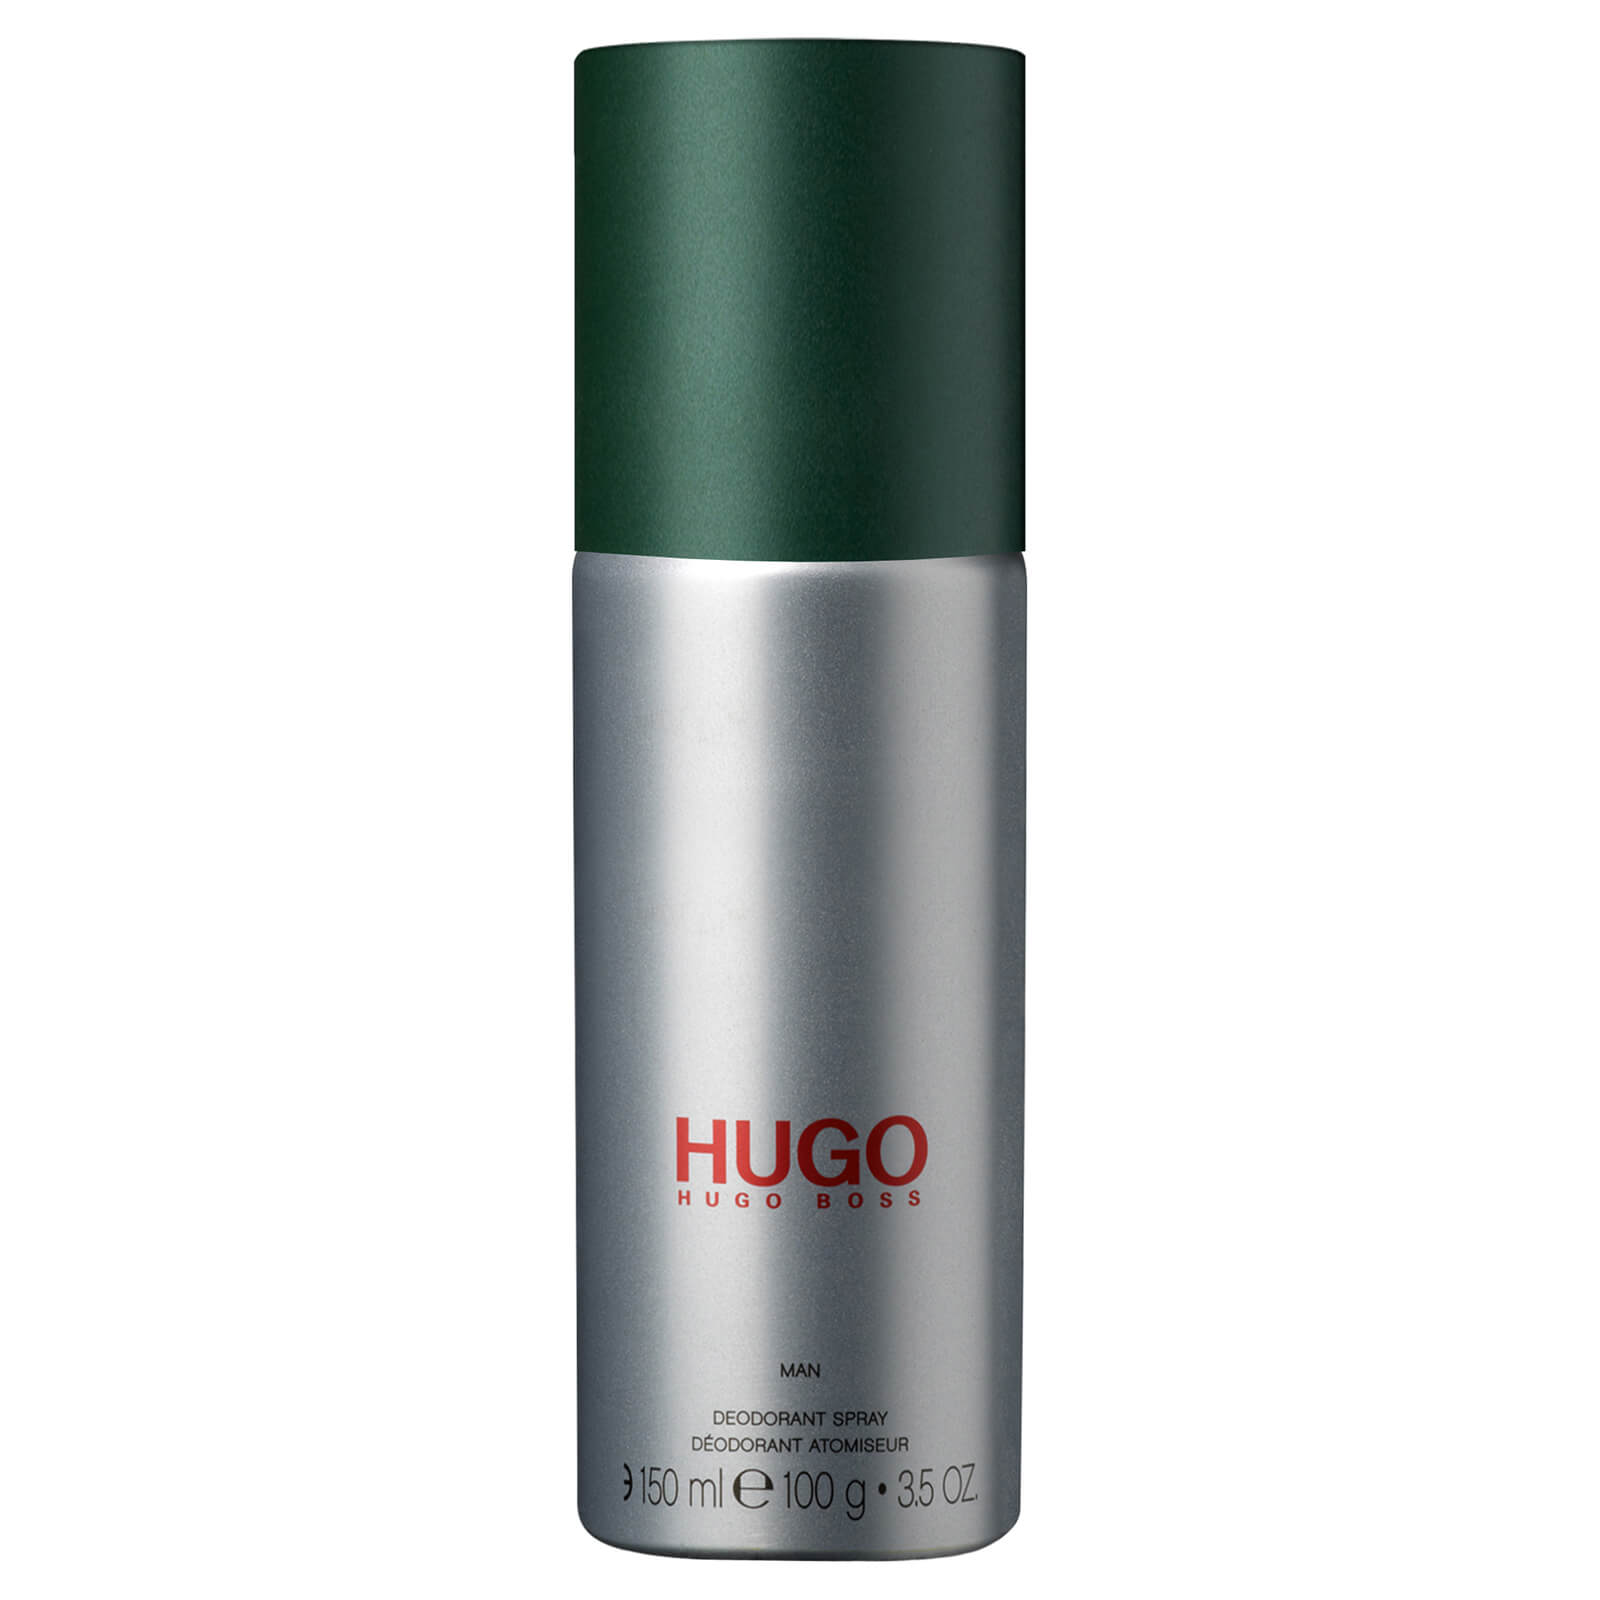 hugo boss body spray Online shopping 